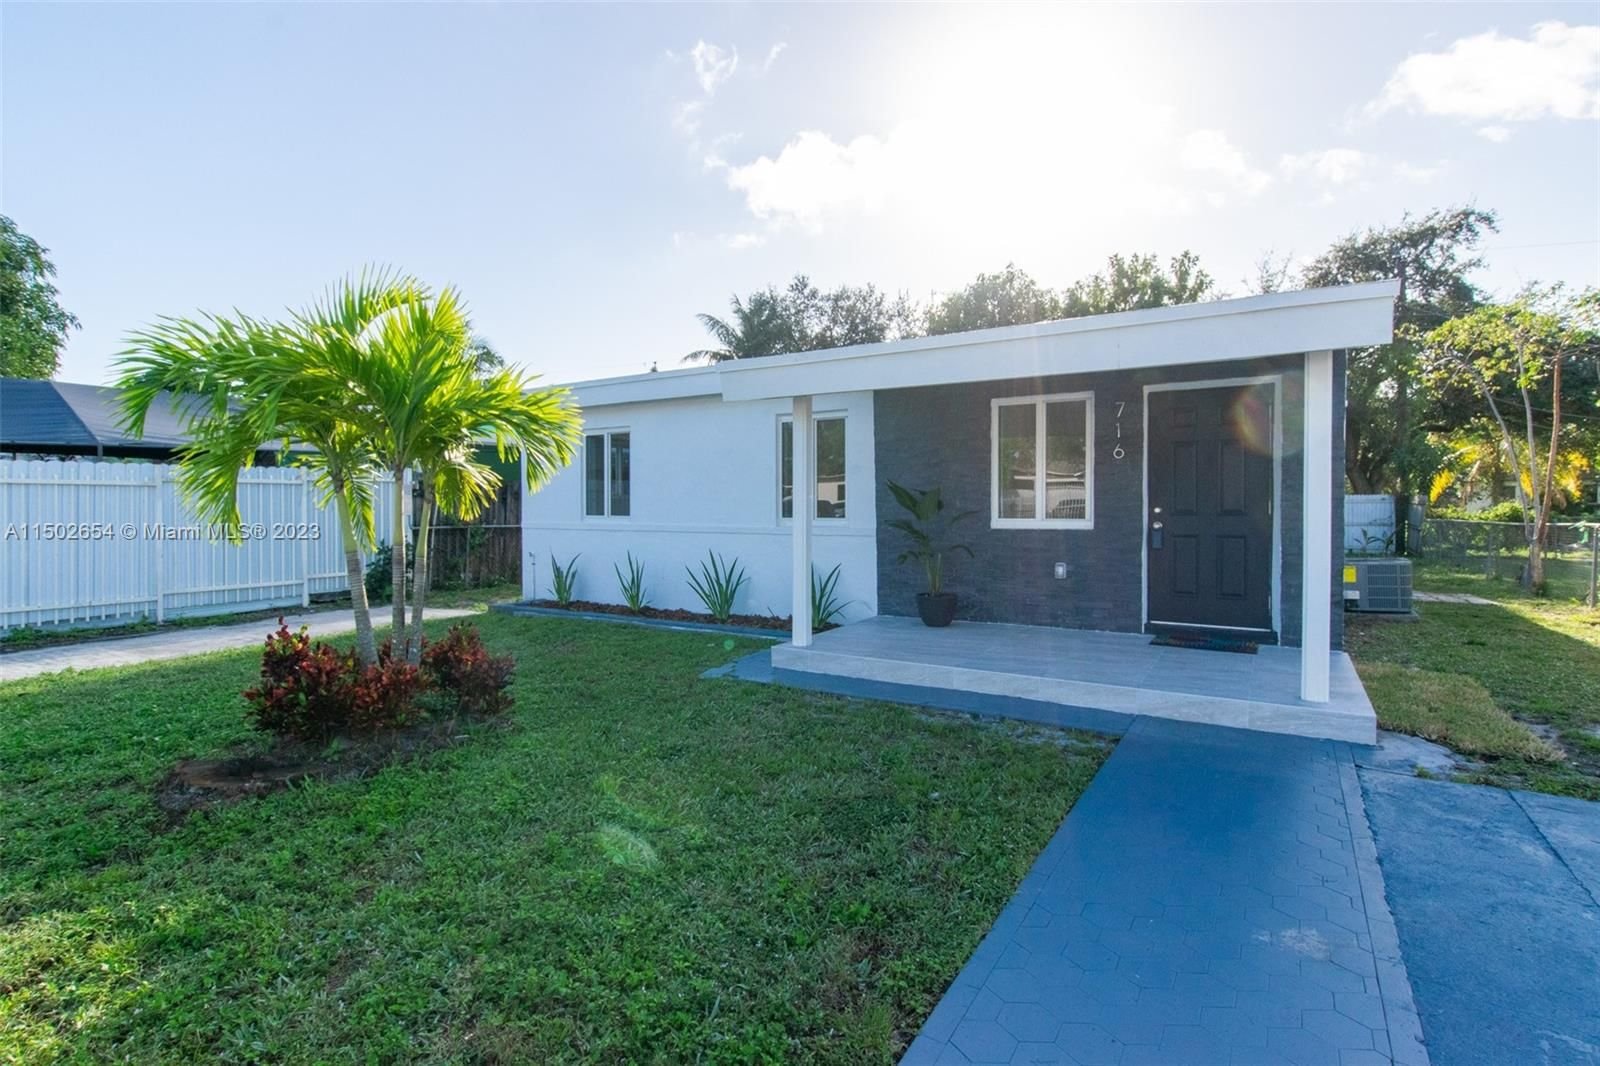 Real estate property located at 716 Burlington St, Miami-Dade County, OPA LOCKA PL NO 3, Opa-Locka, FL